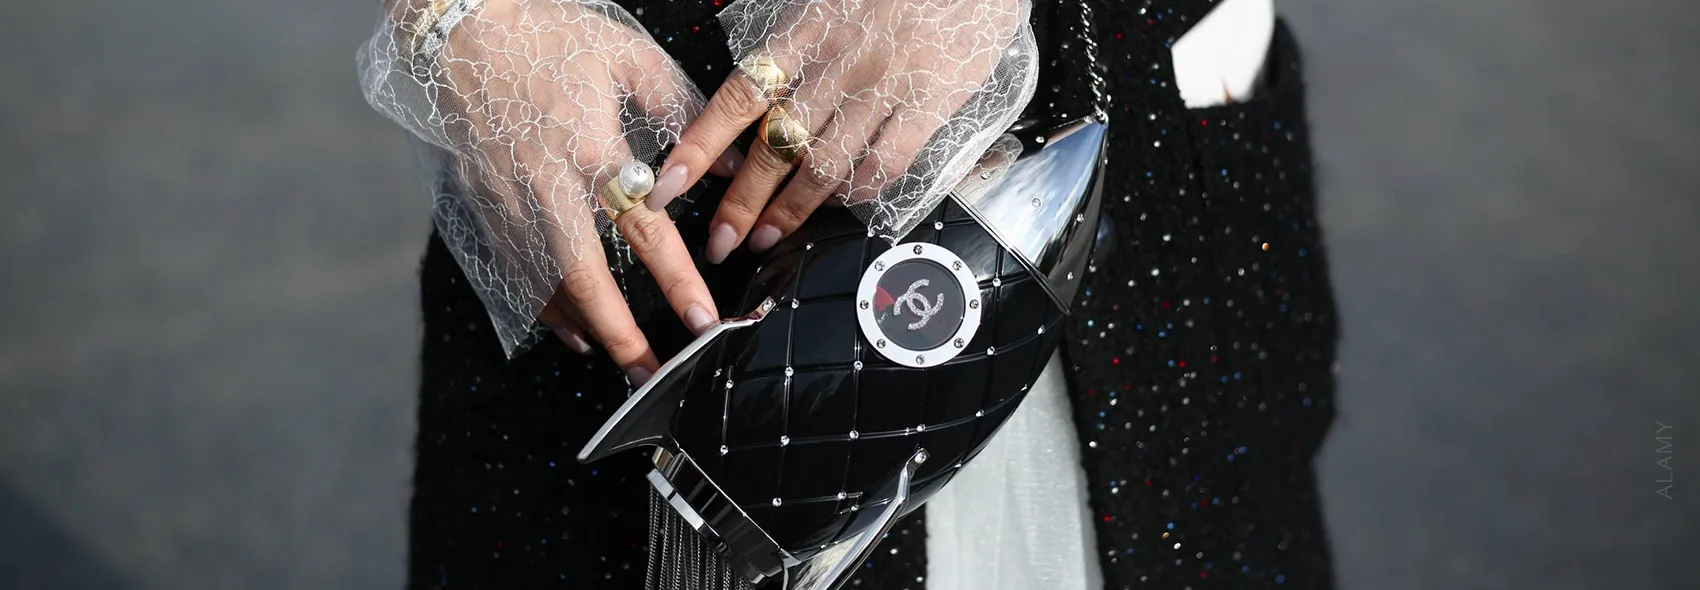 Meet the Holy Grail(s) of Chanel Handbags